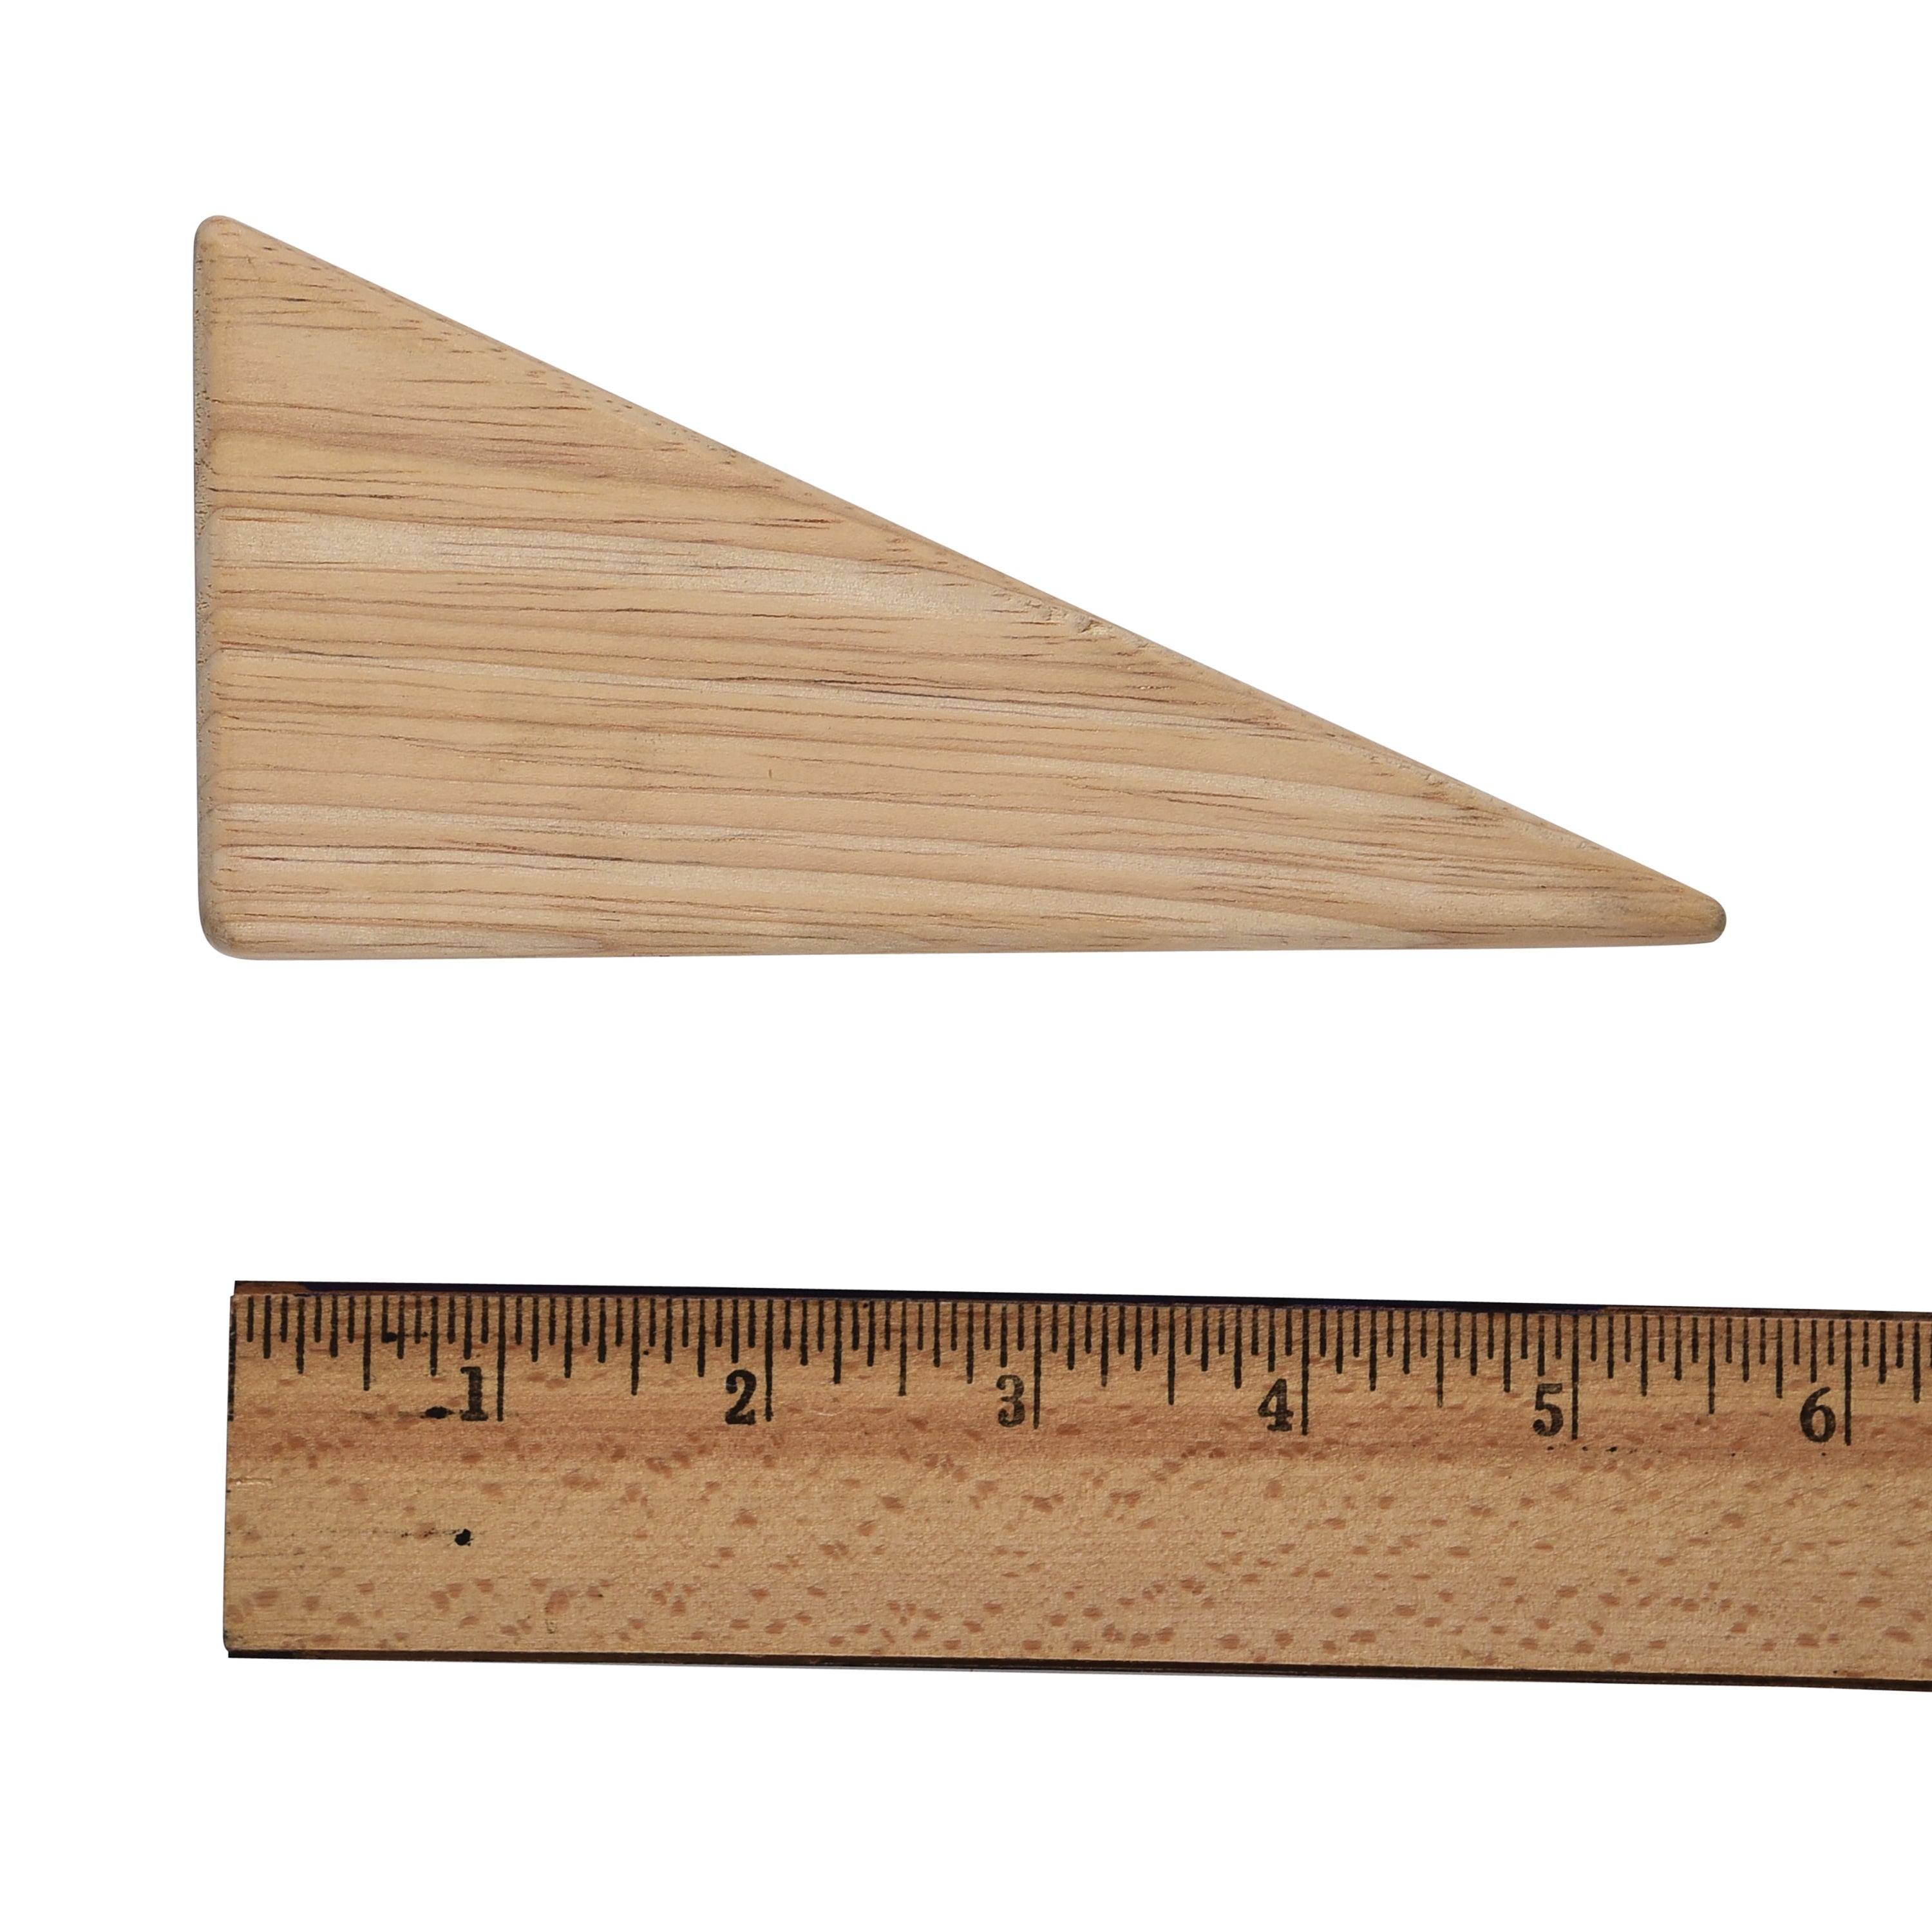 Wood Unit Blocks: Large Triangle Block (Right Angle Triangle)